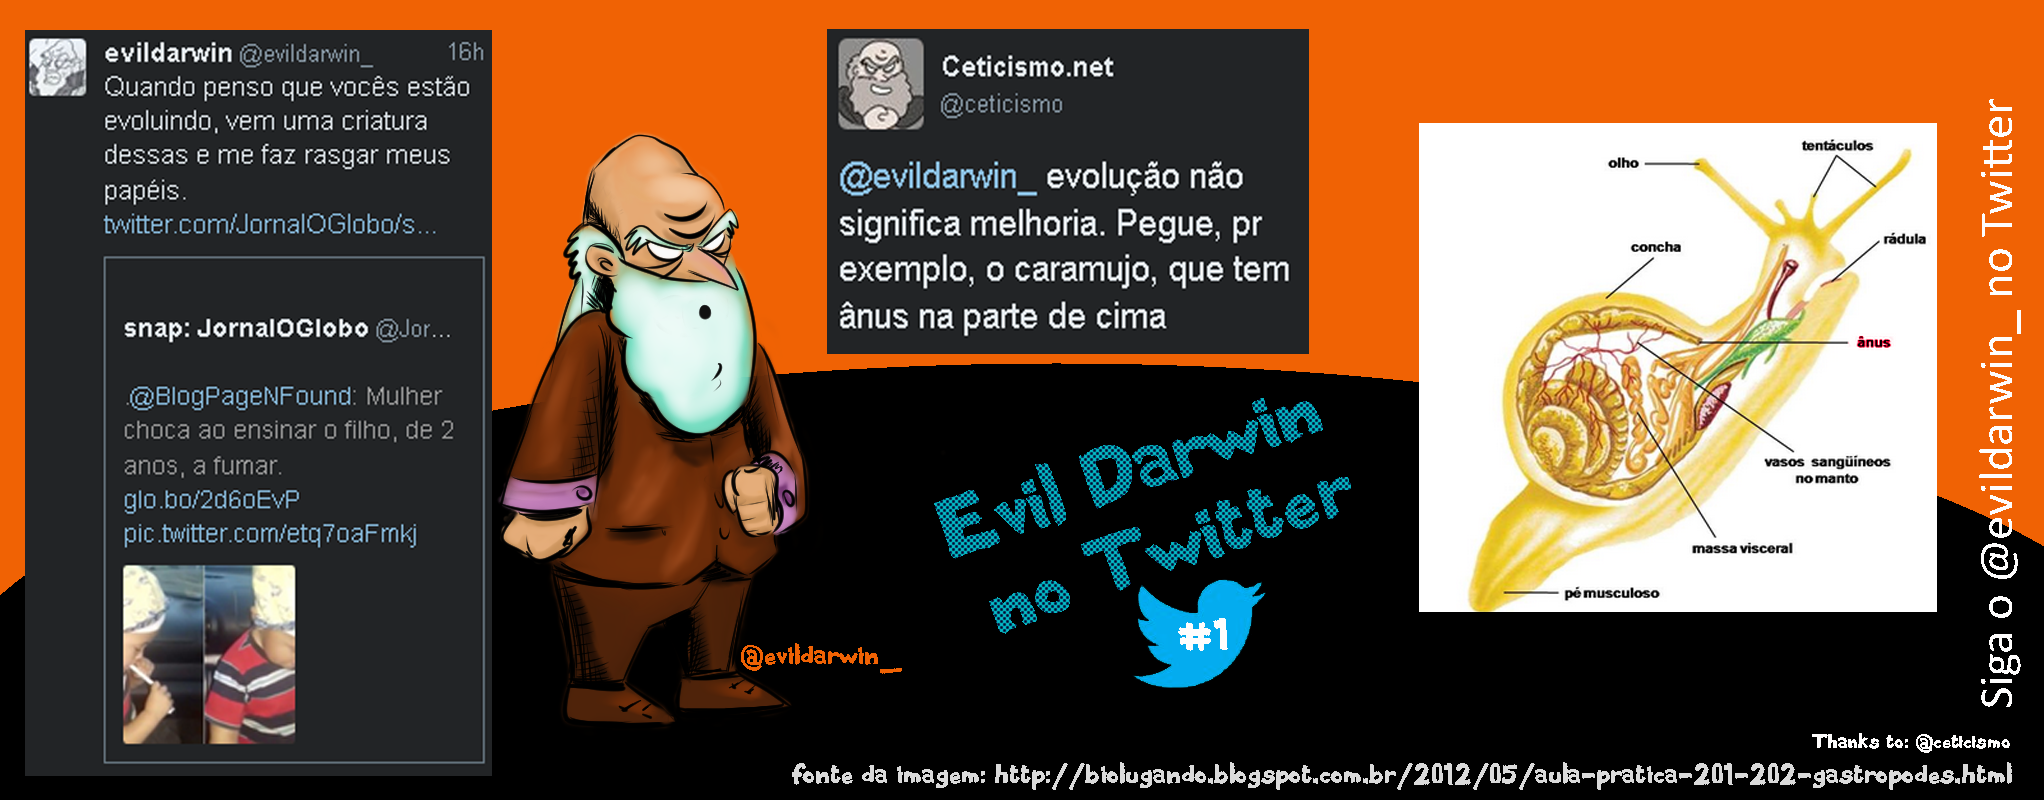 evildarwin_caramujo